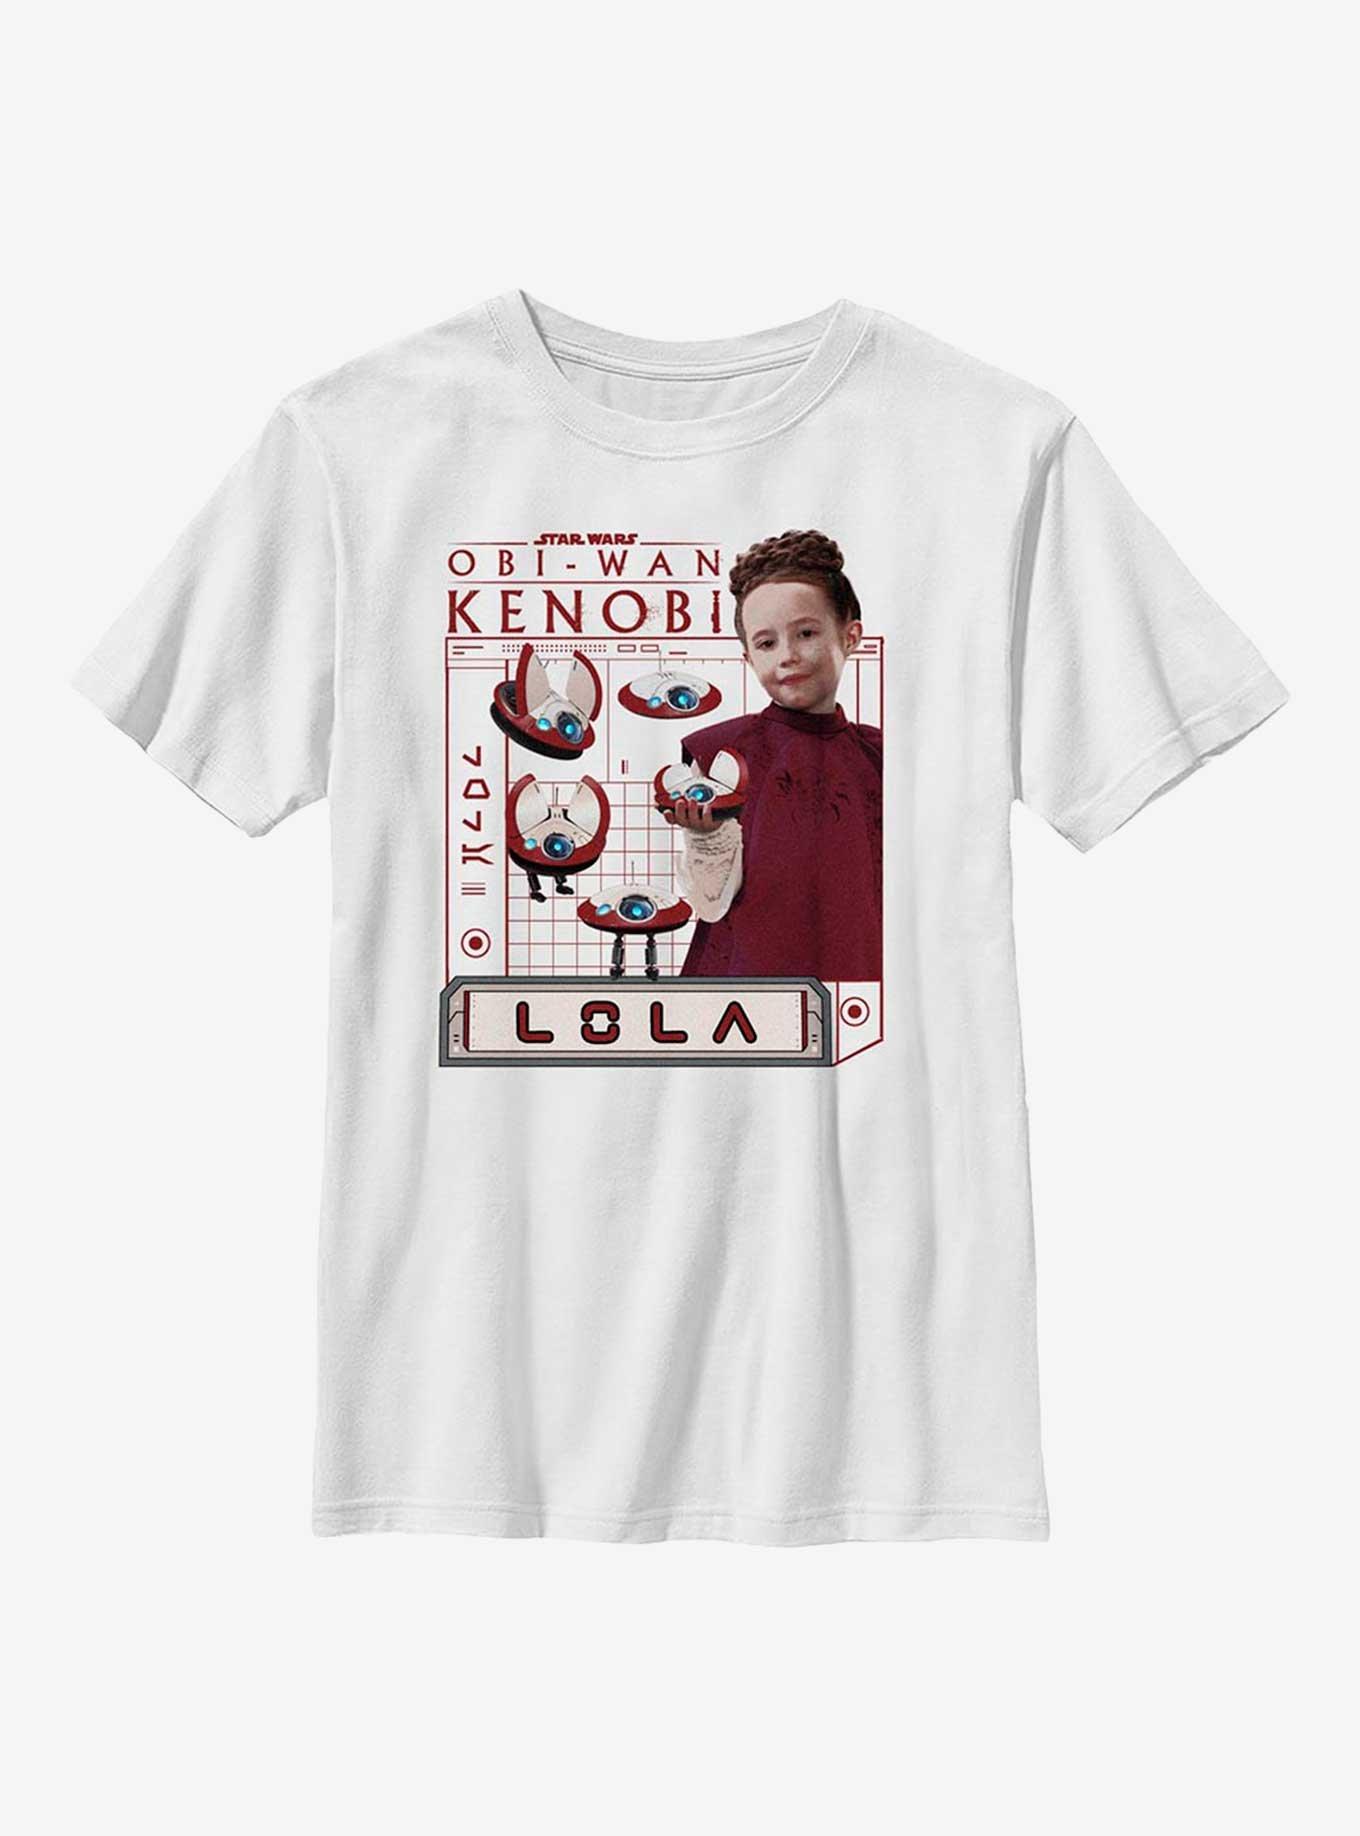 Star Wars Obi-Wan Kenobi Leia & Lola Youth T-Shirt, WHITE, hi-res